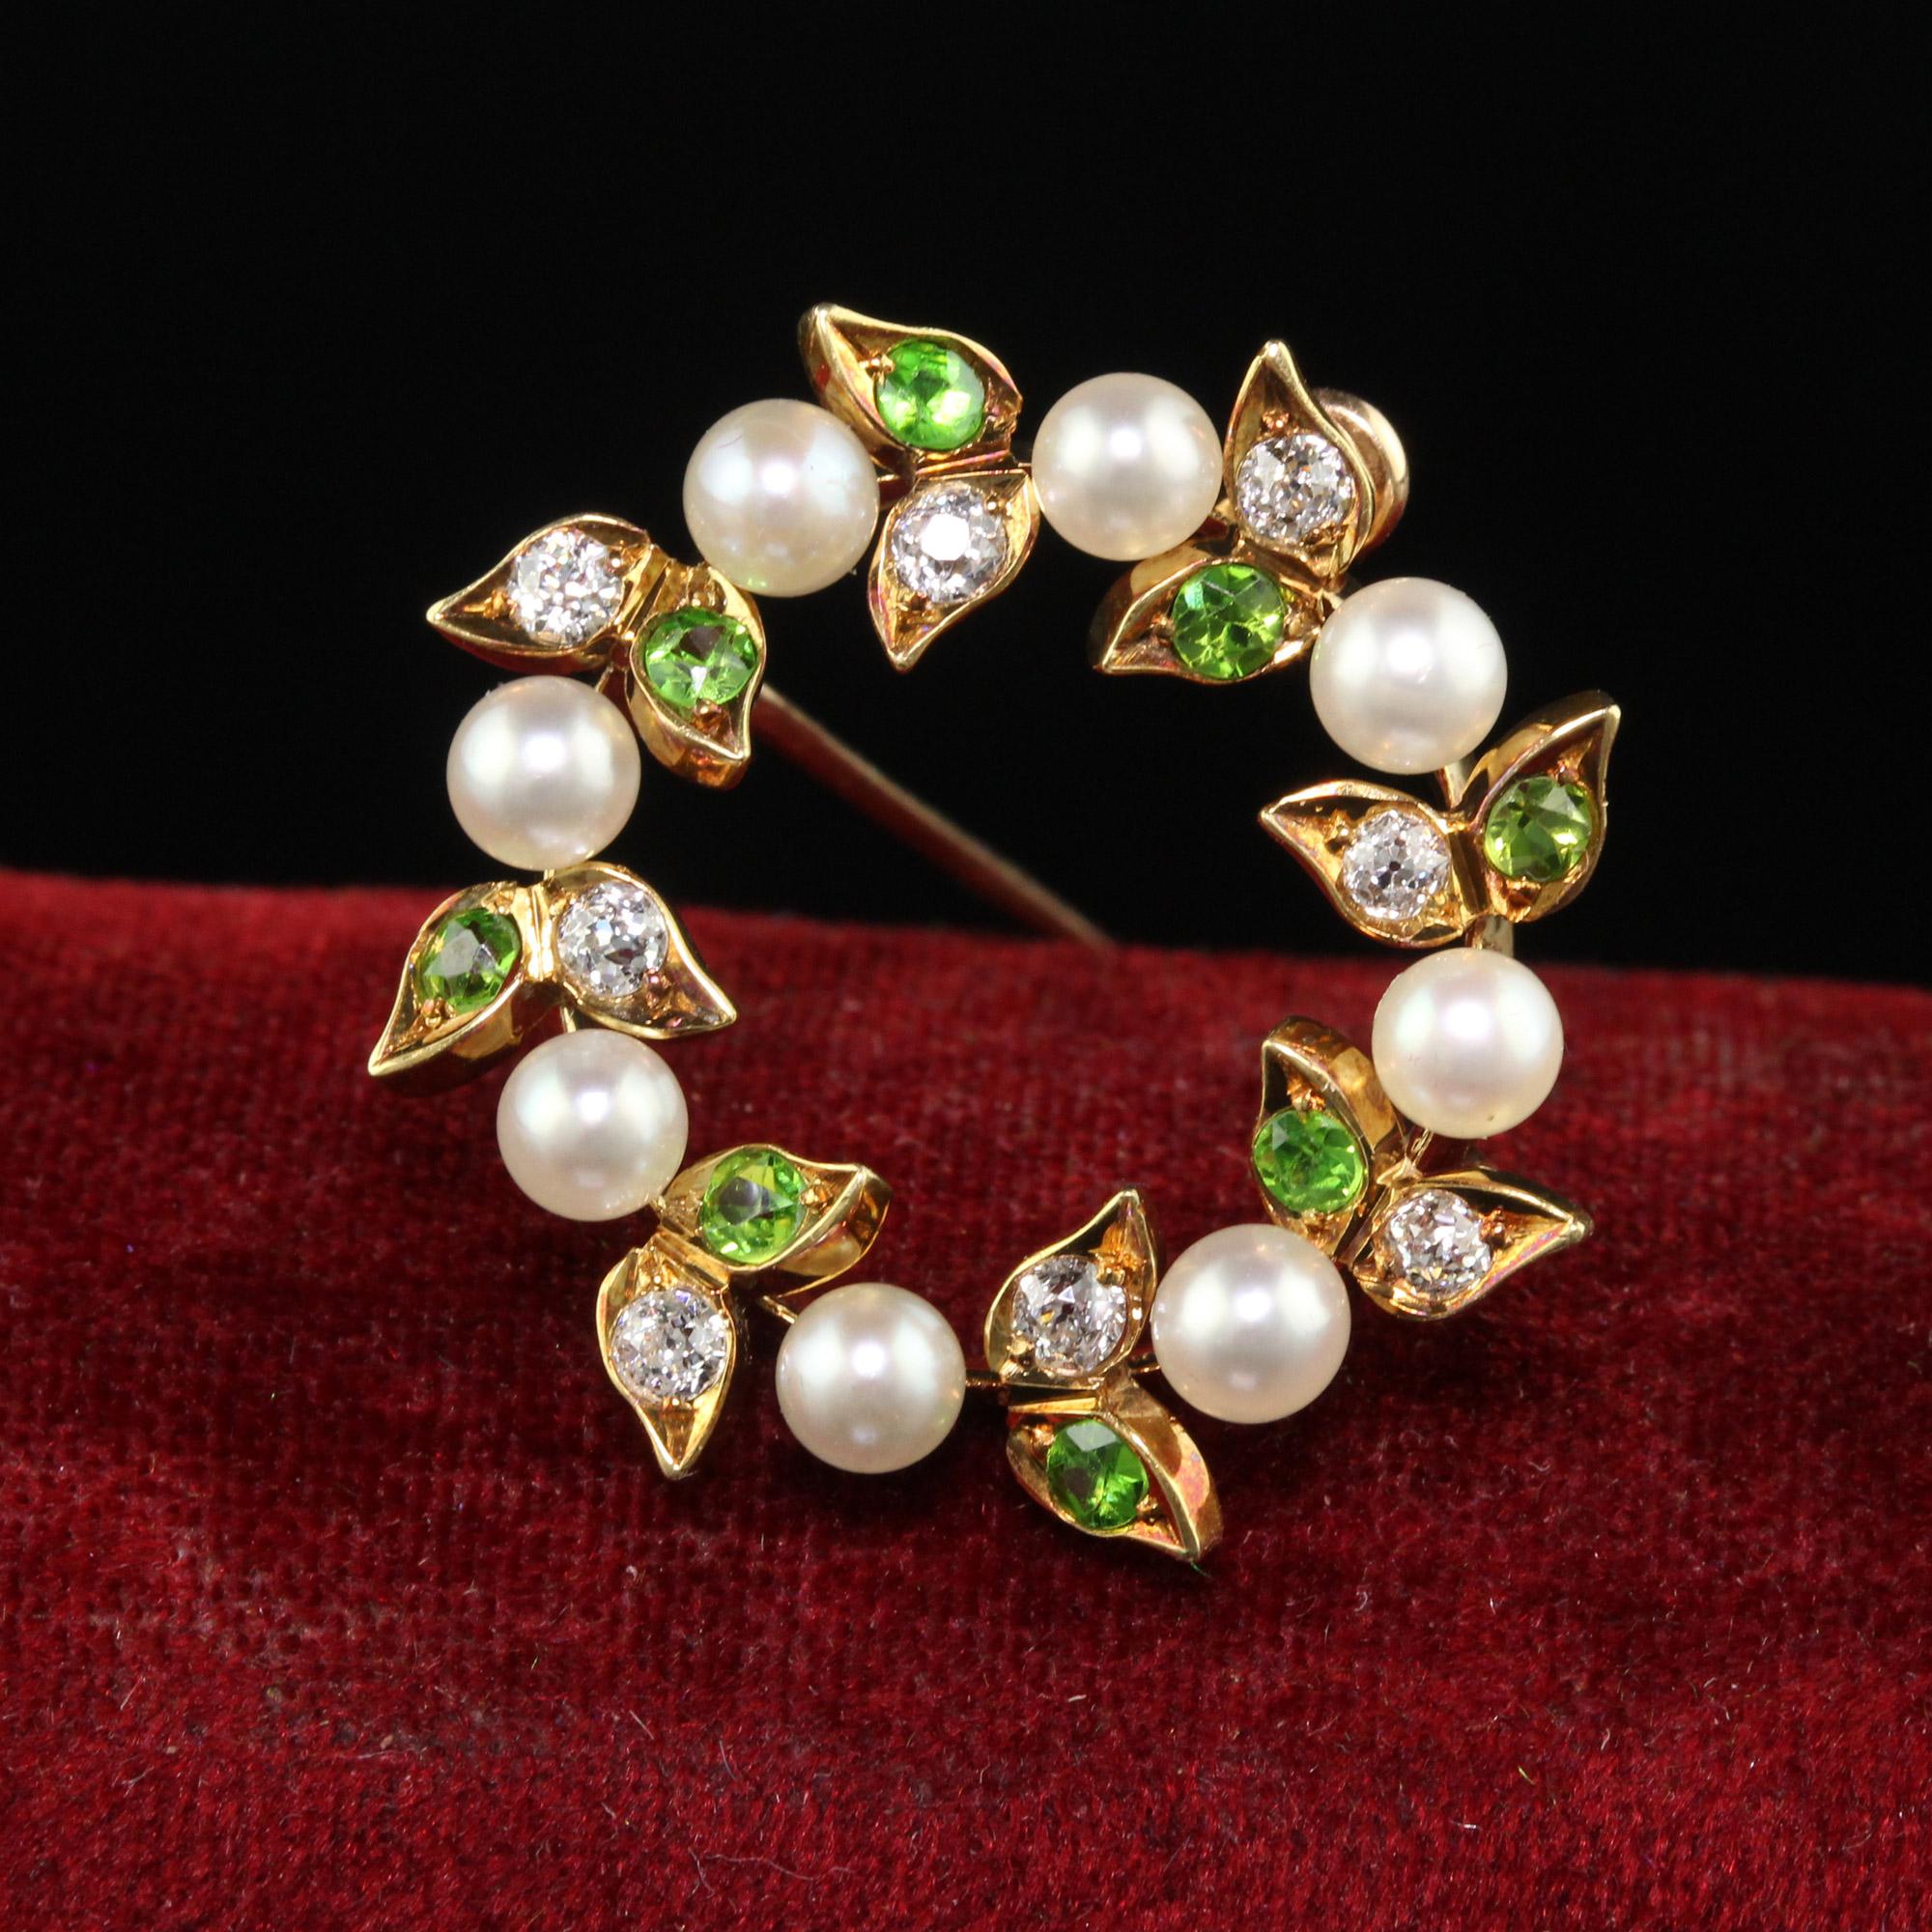 Antique Art Nouveau 18K Yellow Gold Demantoid Garnet Diamond and Pearl Pin Penda For Sale 1